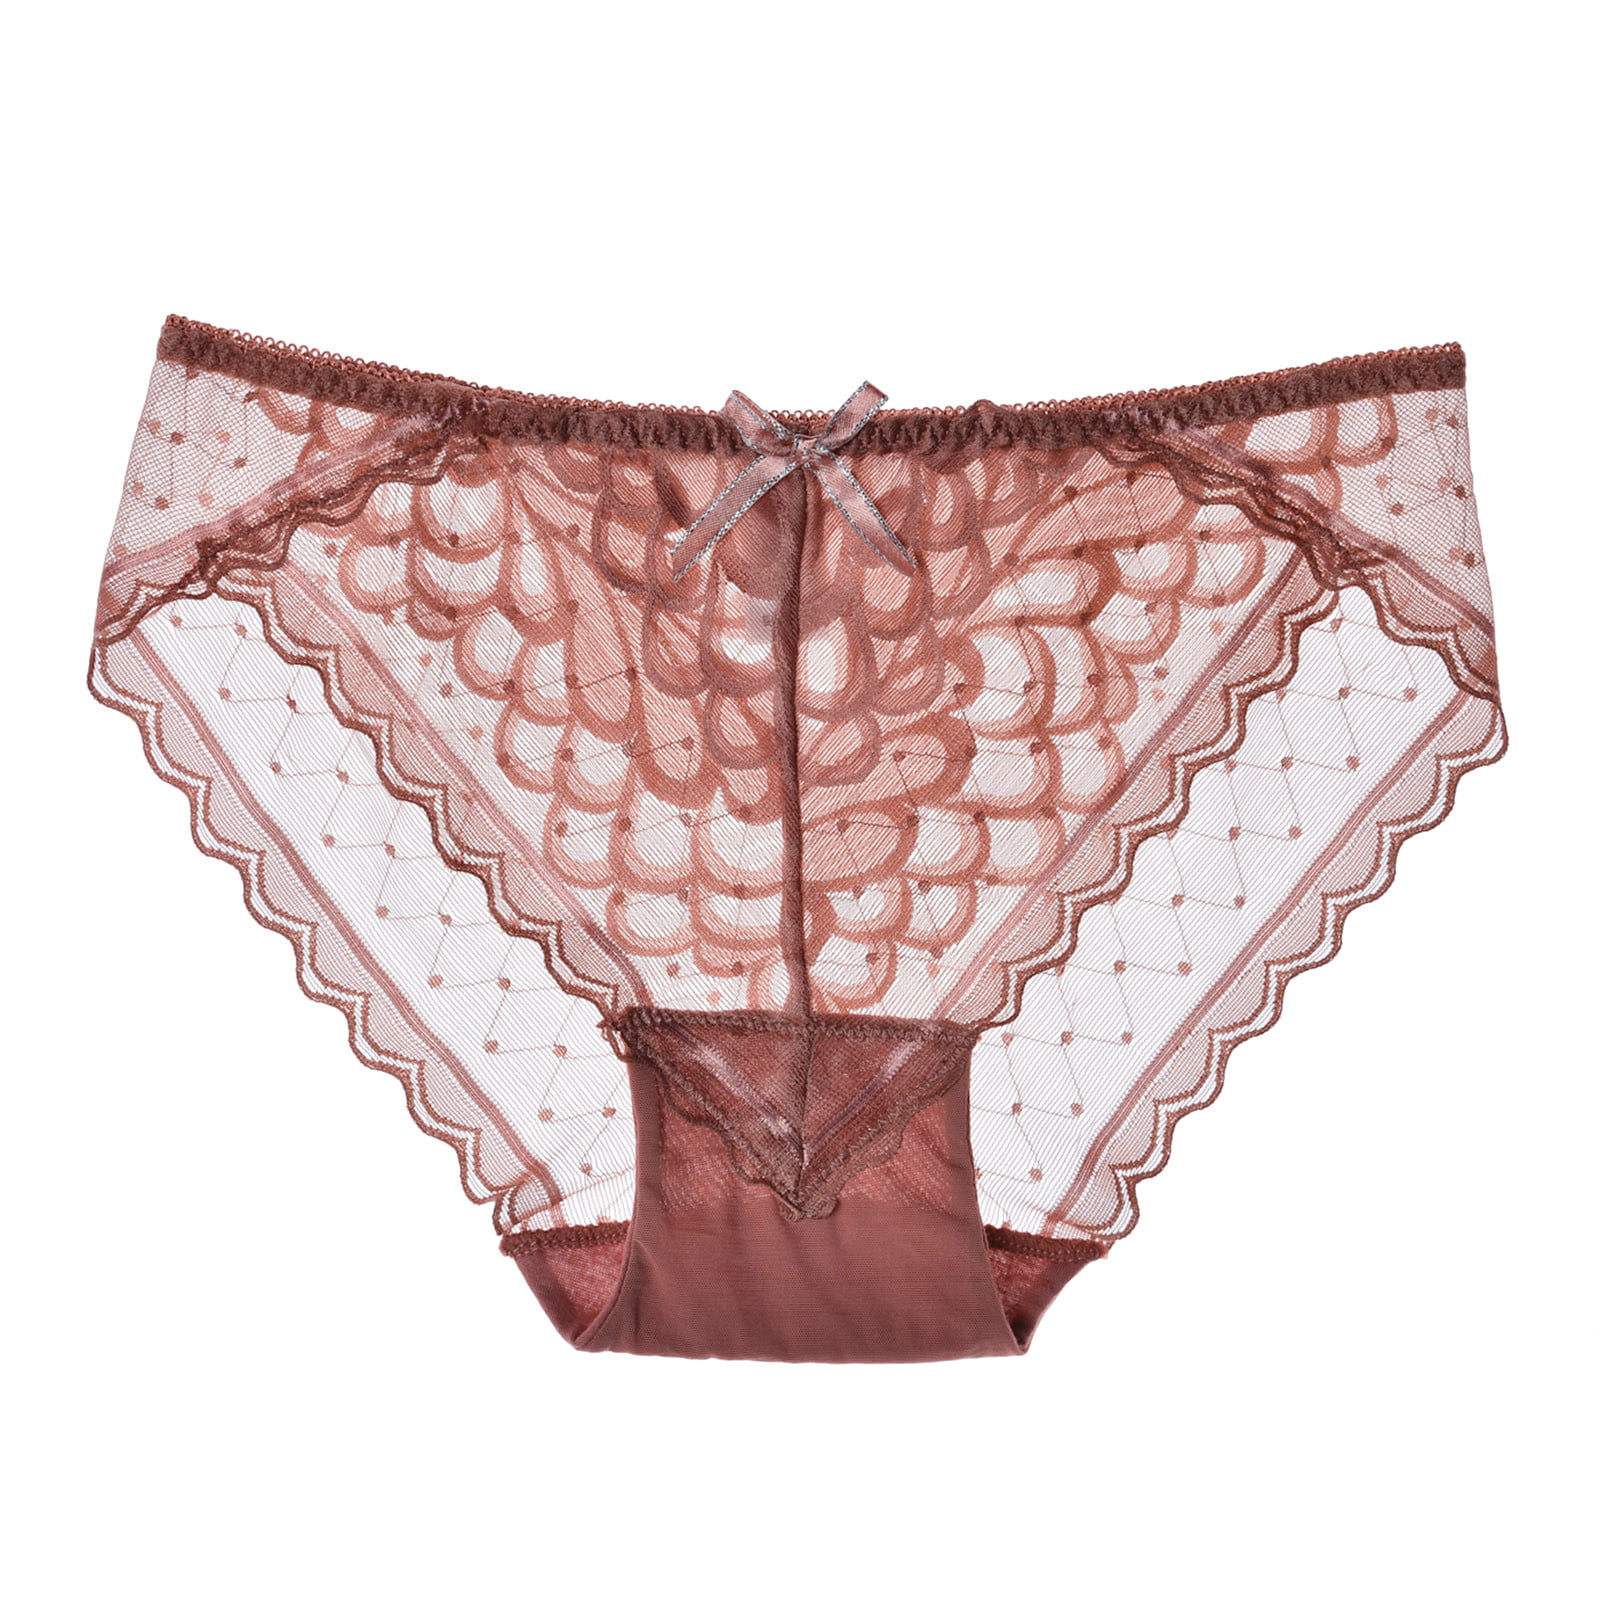 Aayomet Women's Brief Underwear Women's Shiny Rhinestone Lace Thin Strap  Ultra Thin Hot Panties,Pink XL